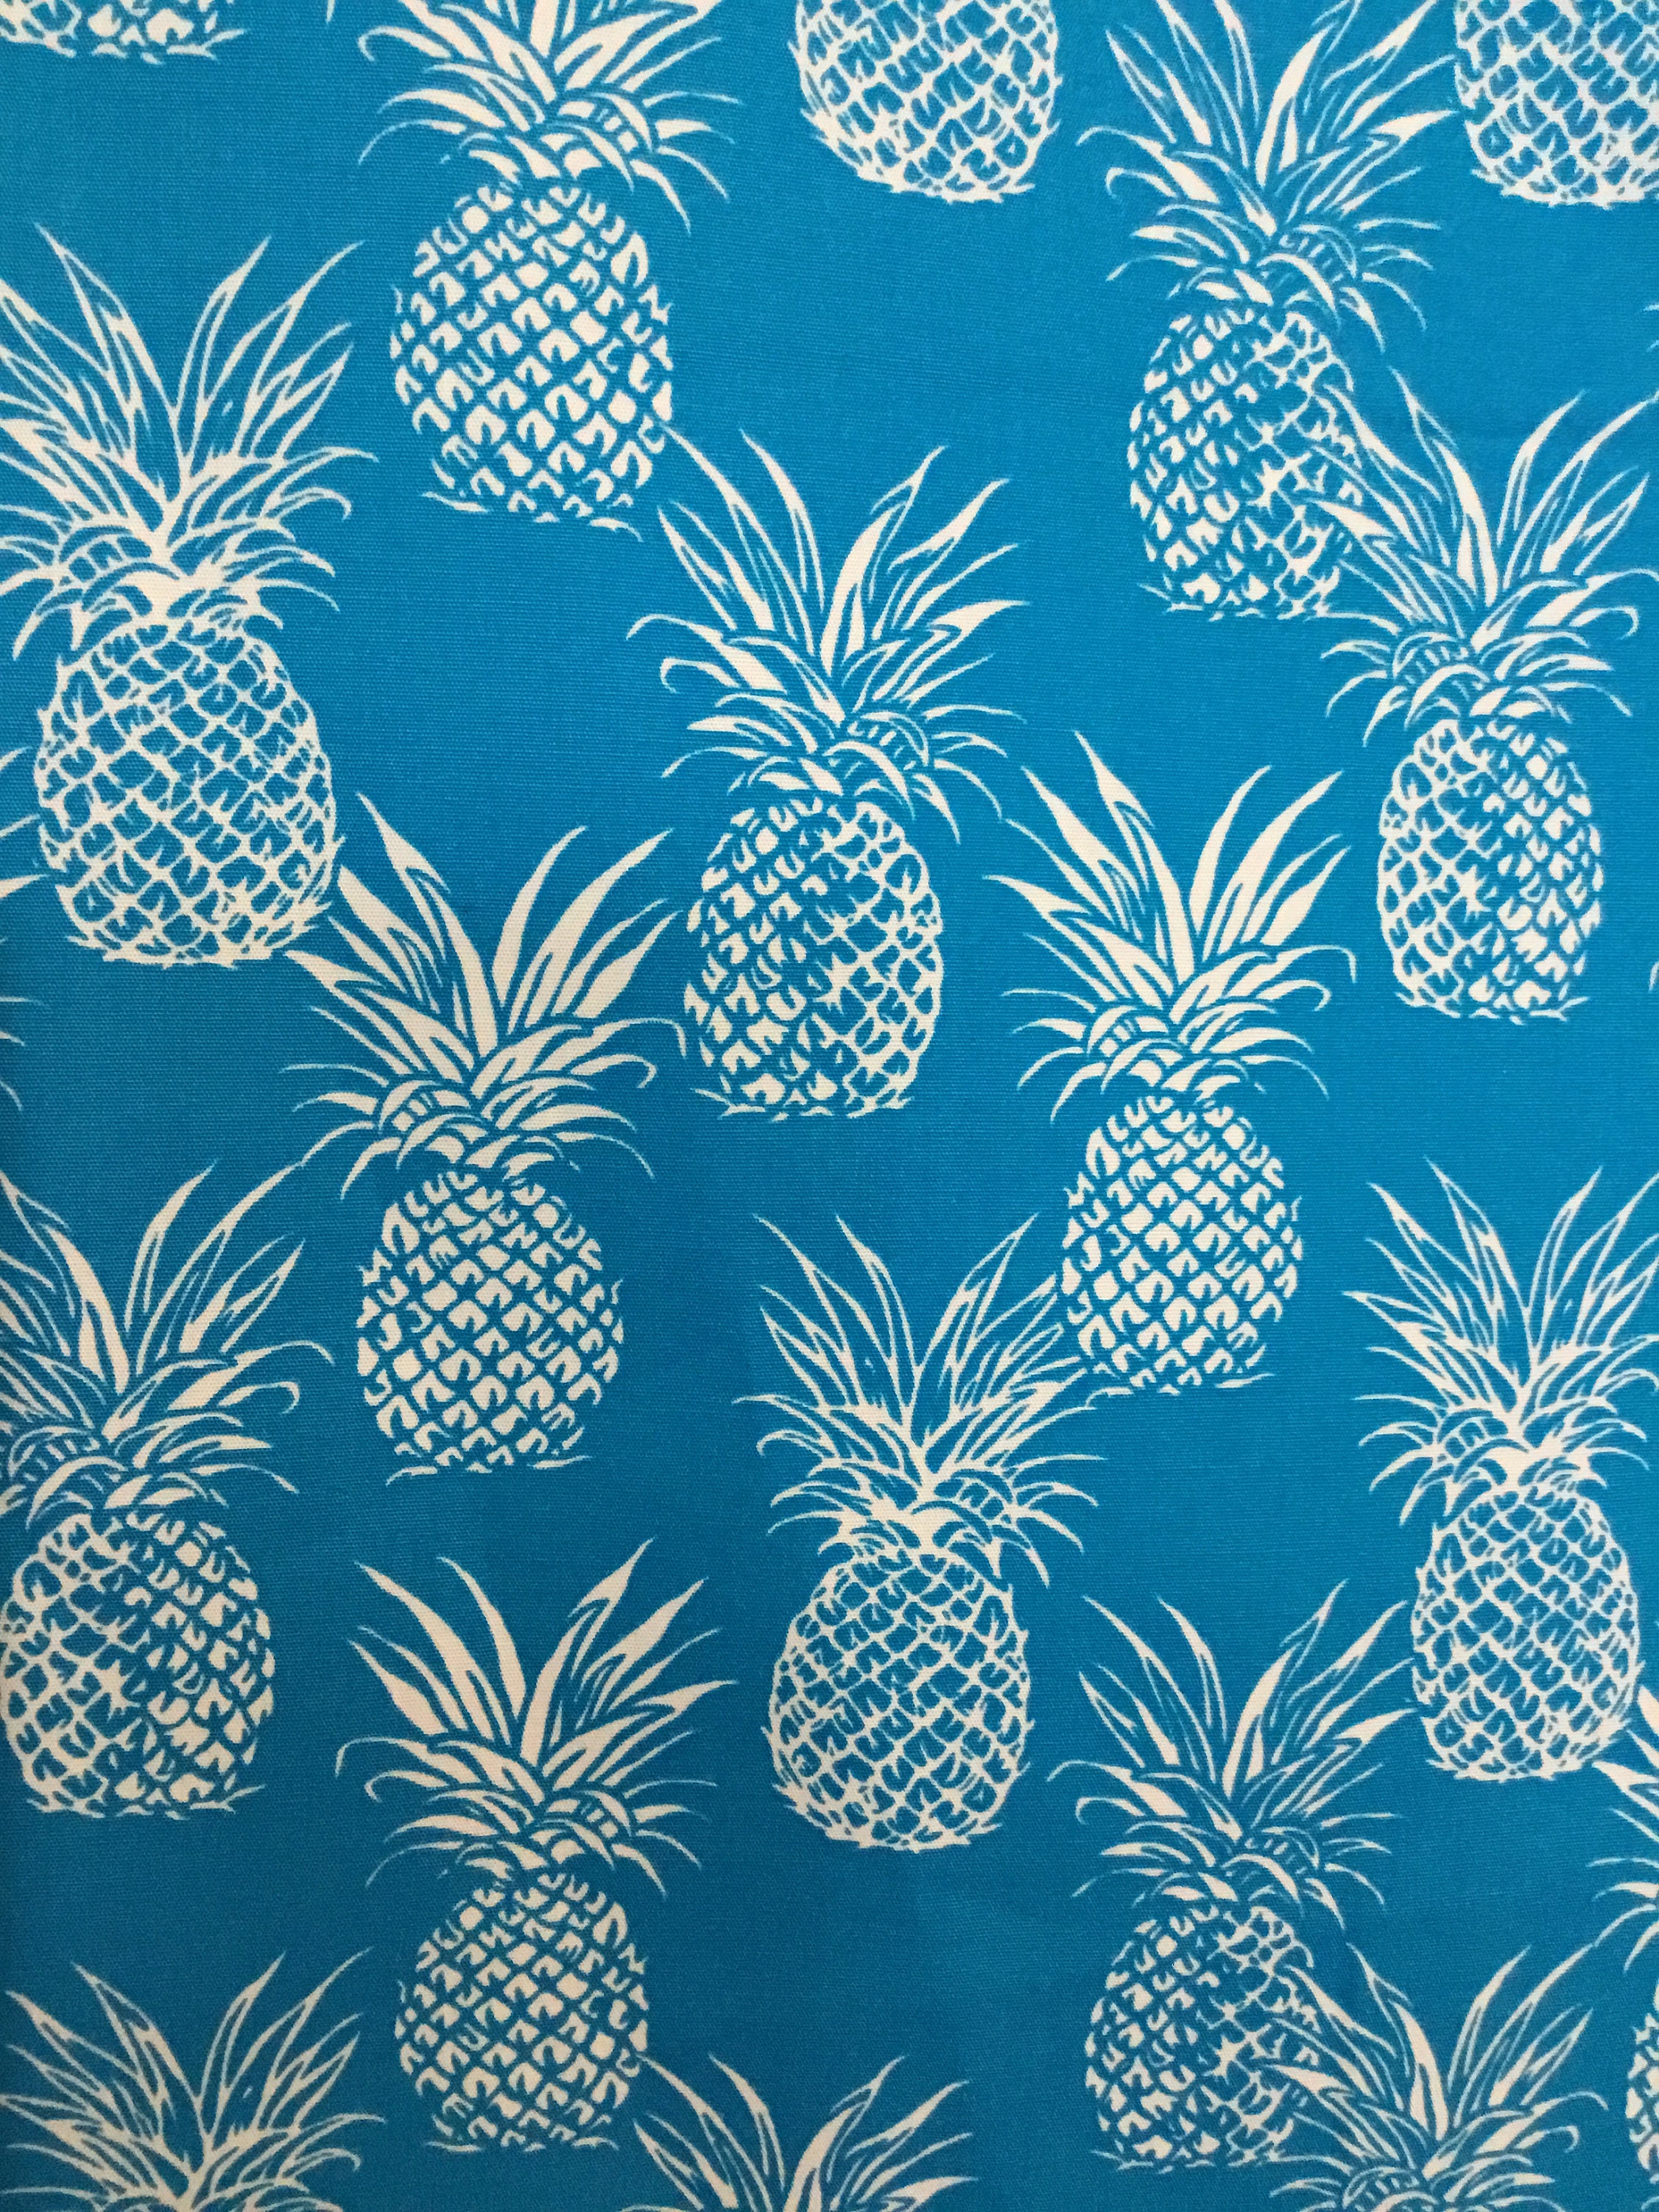 NEW Turquoise Blue Pineapple Hawaiian Print Fabric Sold by the Yard 